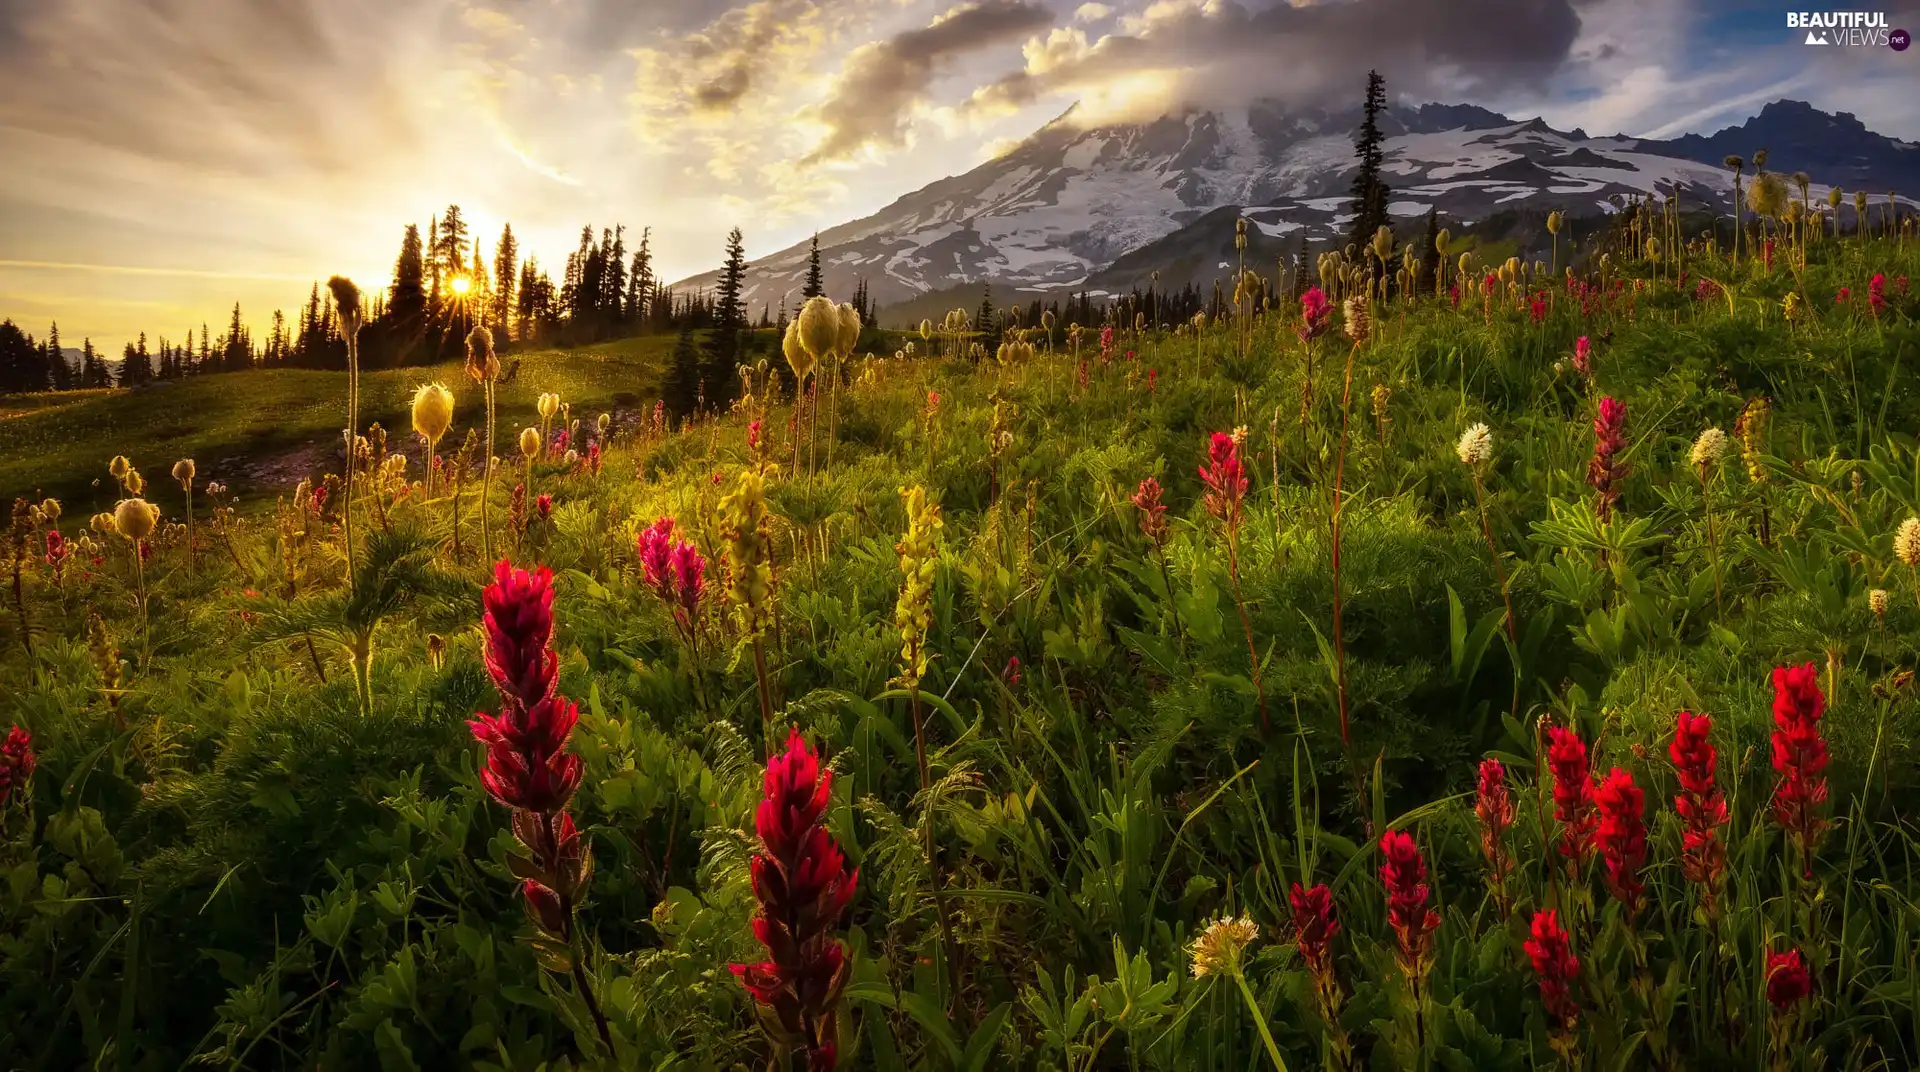 Stratovolcano Mount Rainier, Meadow, Mount Rainier National Park, Washington State, Red Ginger, Sunrise, Mountains, Flowers, The United States